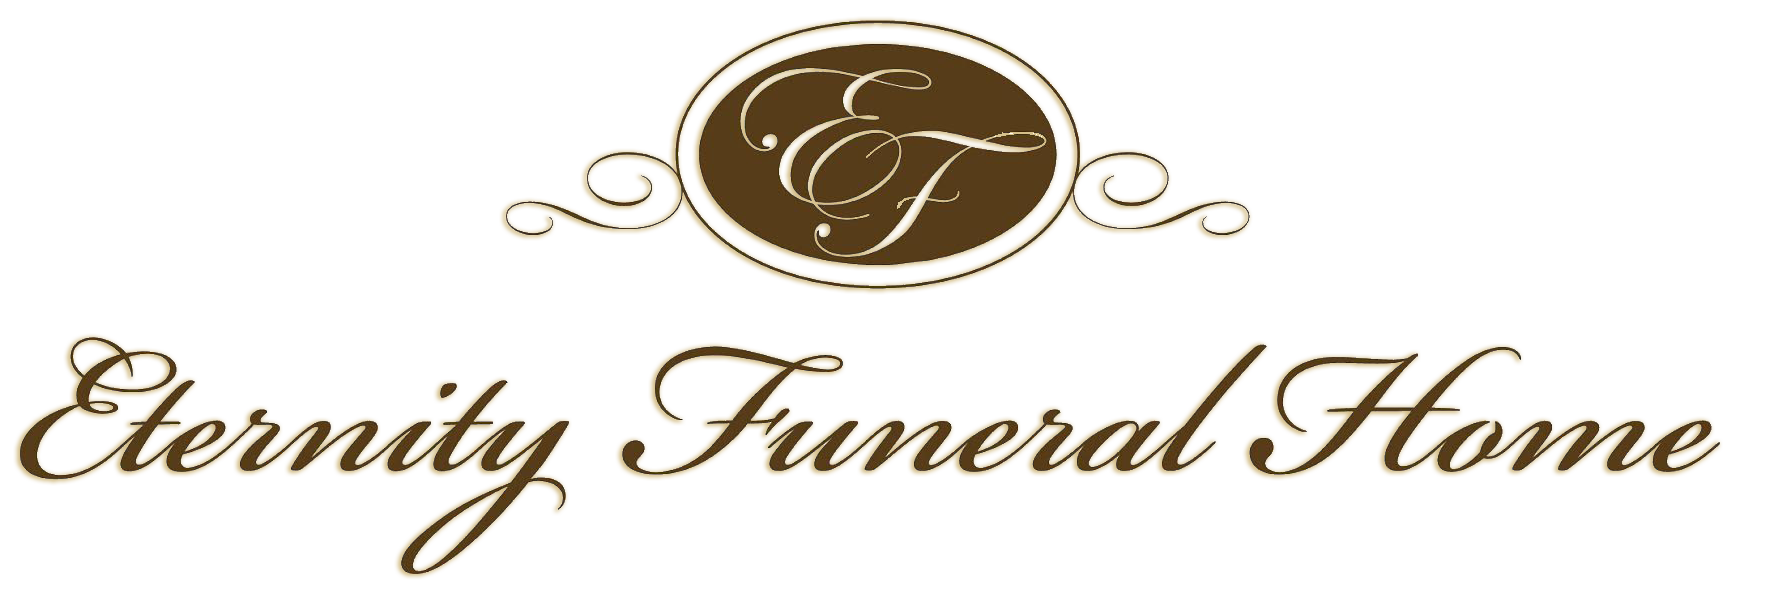 Funeral clipart funeral casket. Eternity home grantsville ut